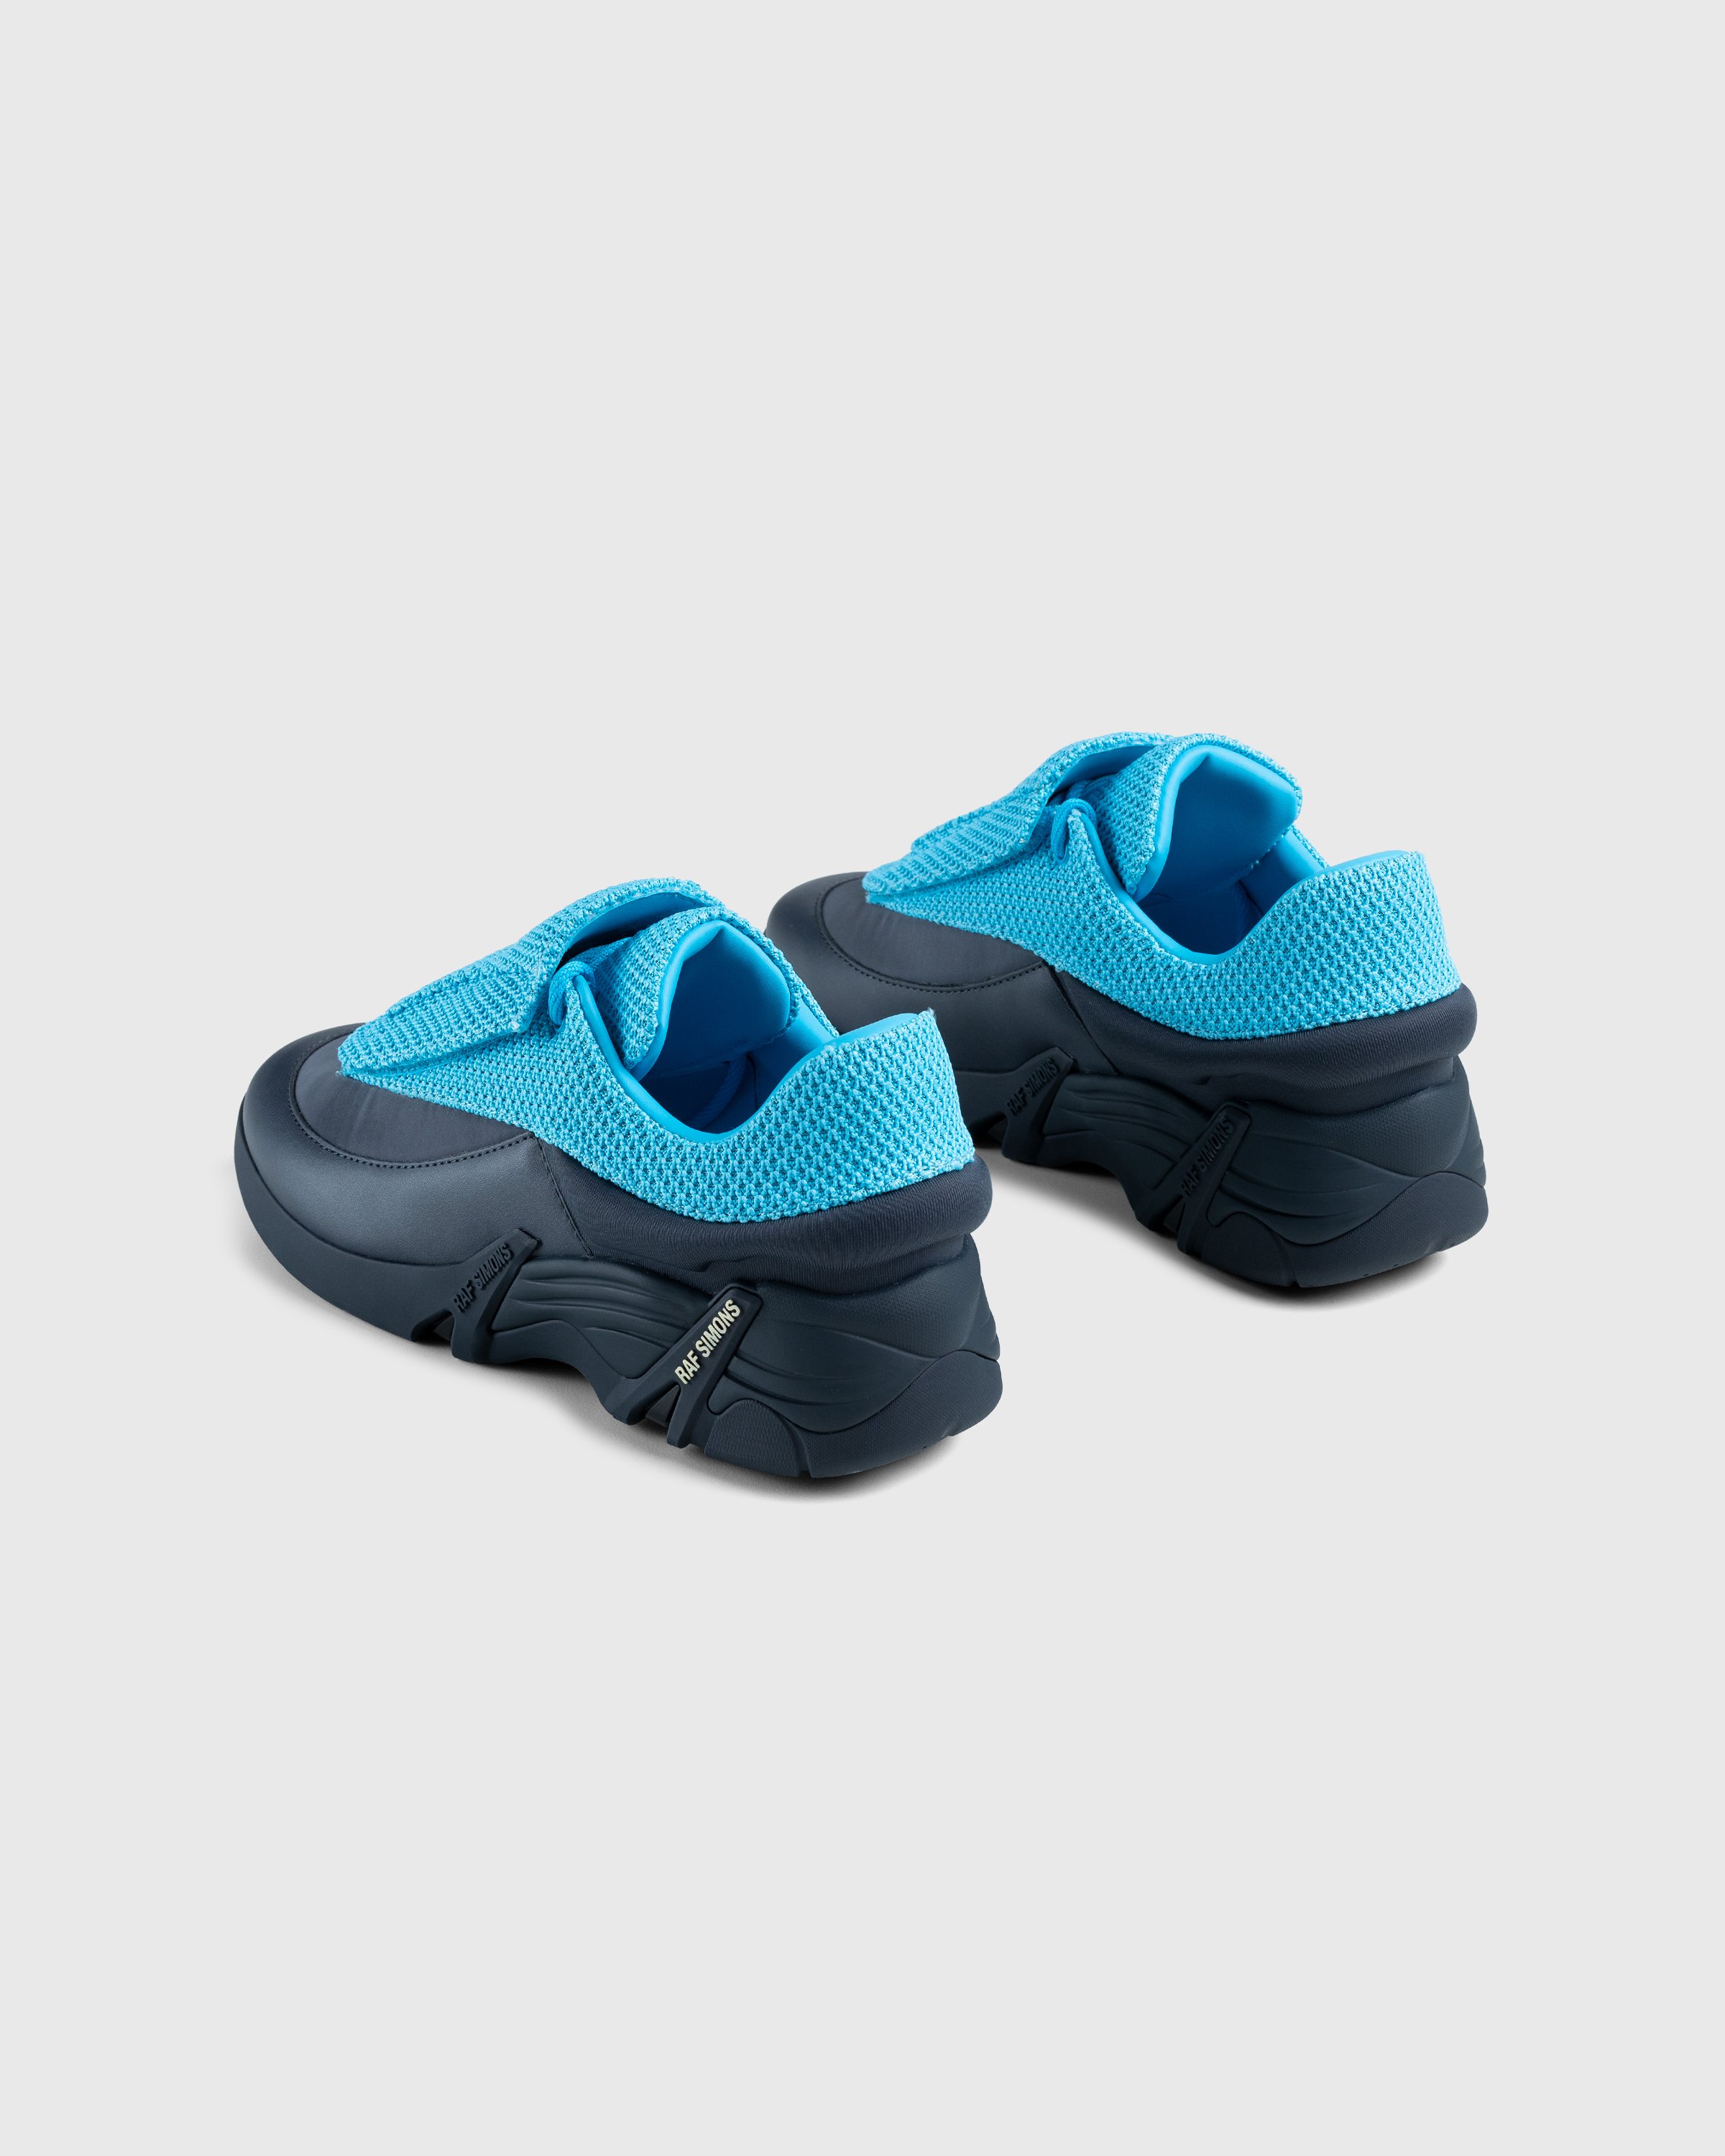 Raf Simons - Antei Aqua - Footwear - Blue - Image 4